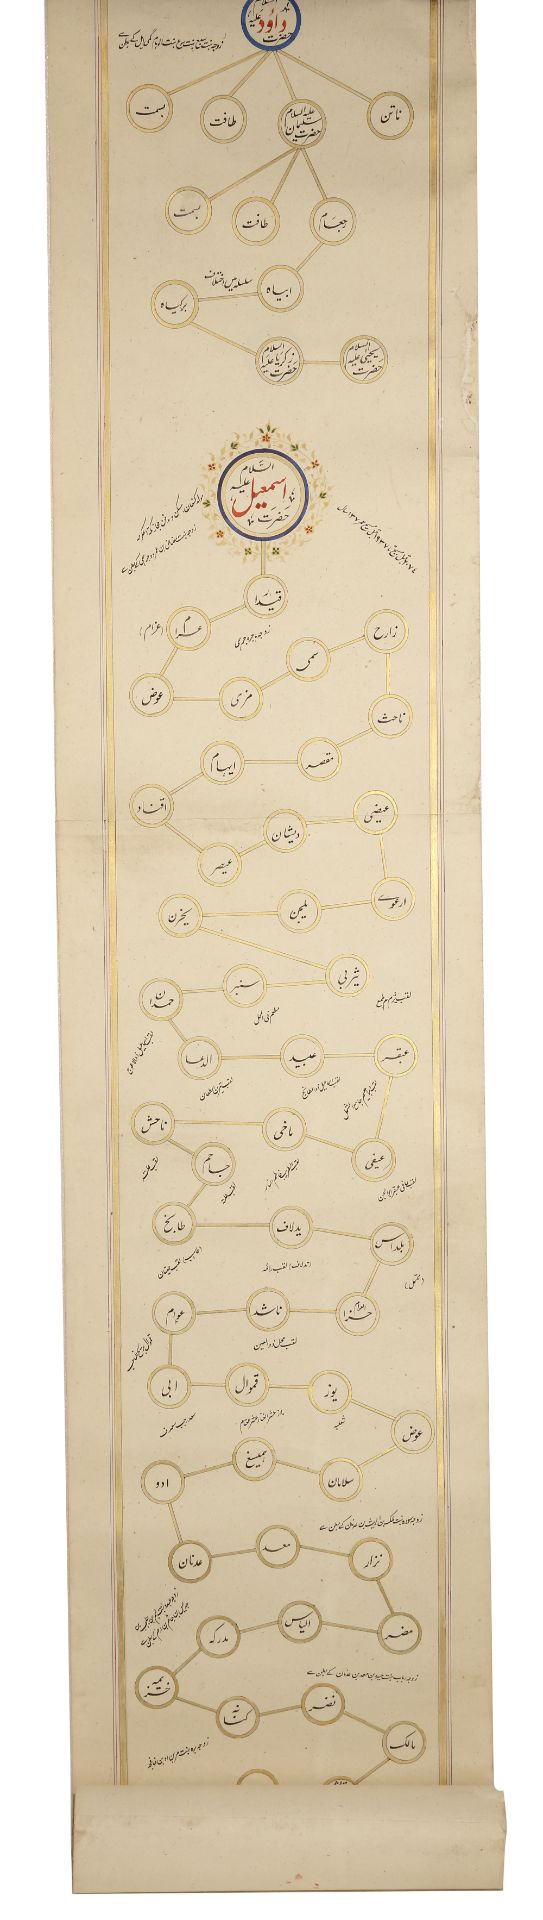 A LARGE OTTOMAN GENEALOGICAL SCROLL (SILSILENAME), TURKEY, 18TH CENTURY - Image 7 of 9